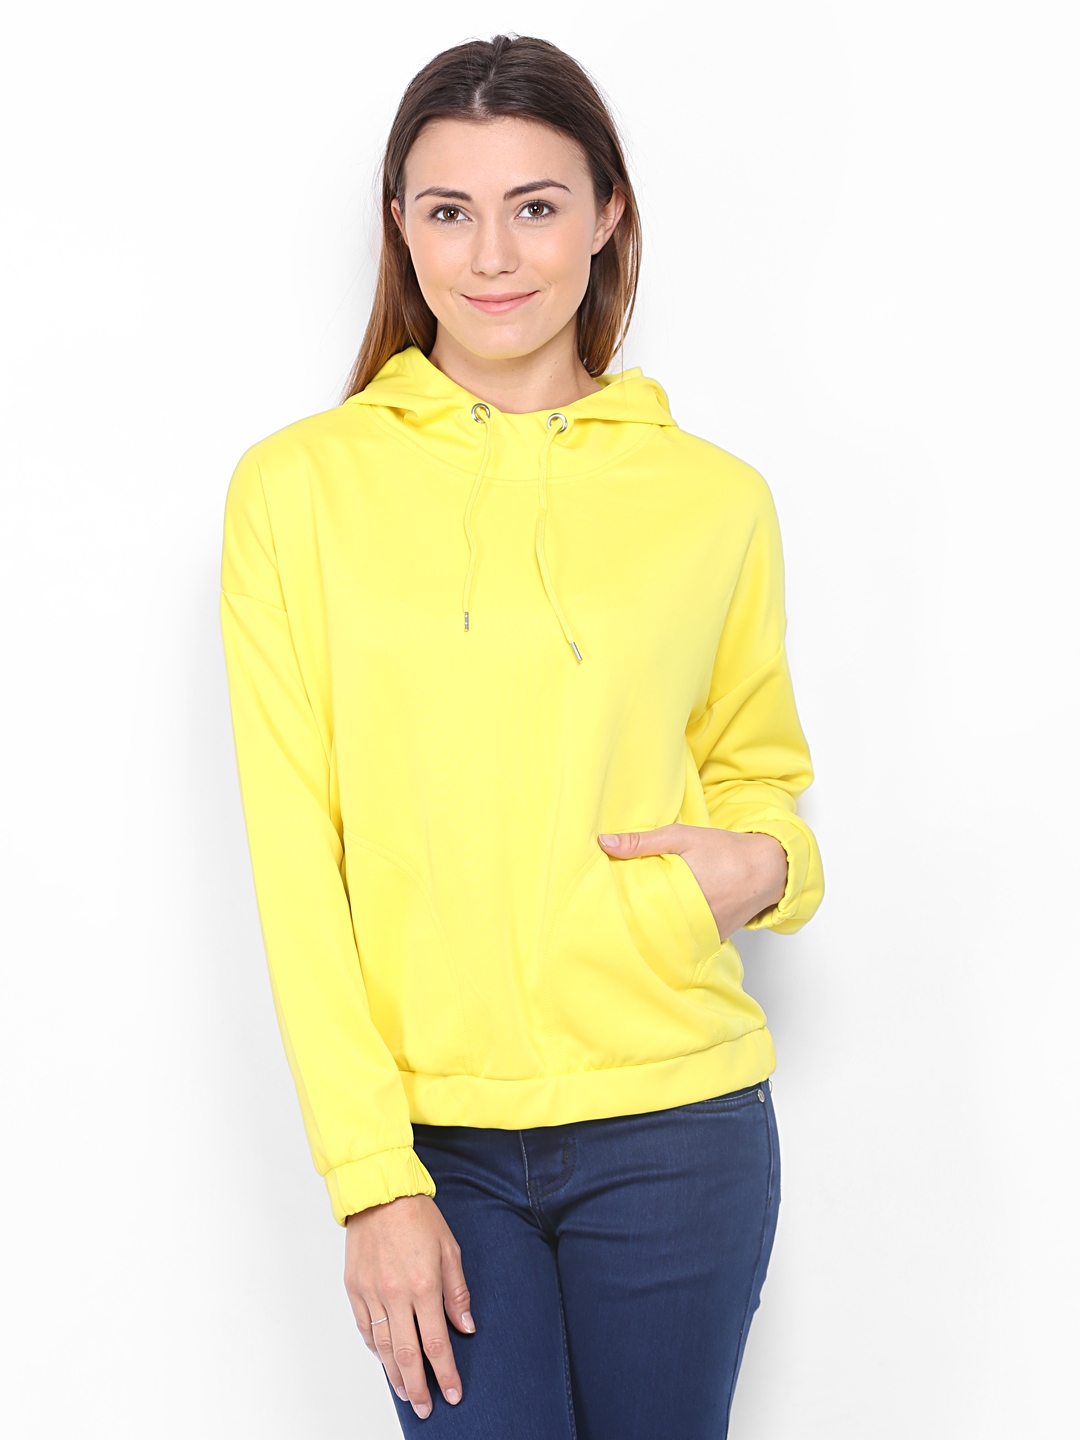 Vero Moda Women Yellow Hooded Sweatshirt Eb64ff225d8b7d1869e842eebb990cce Images 